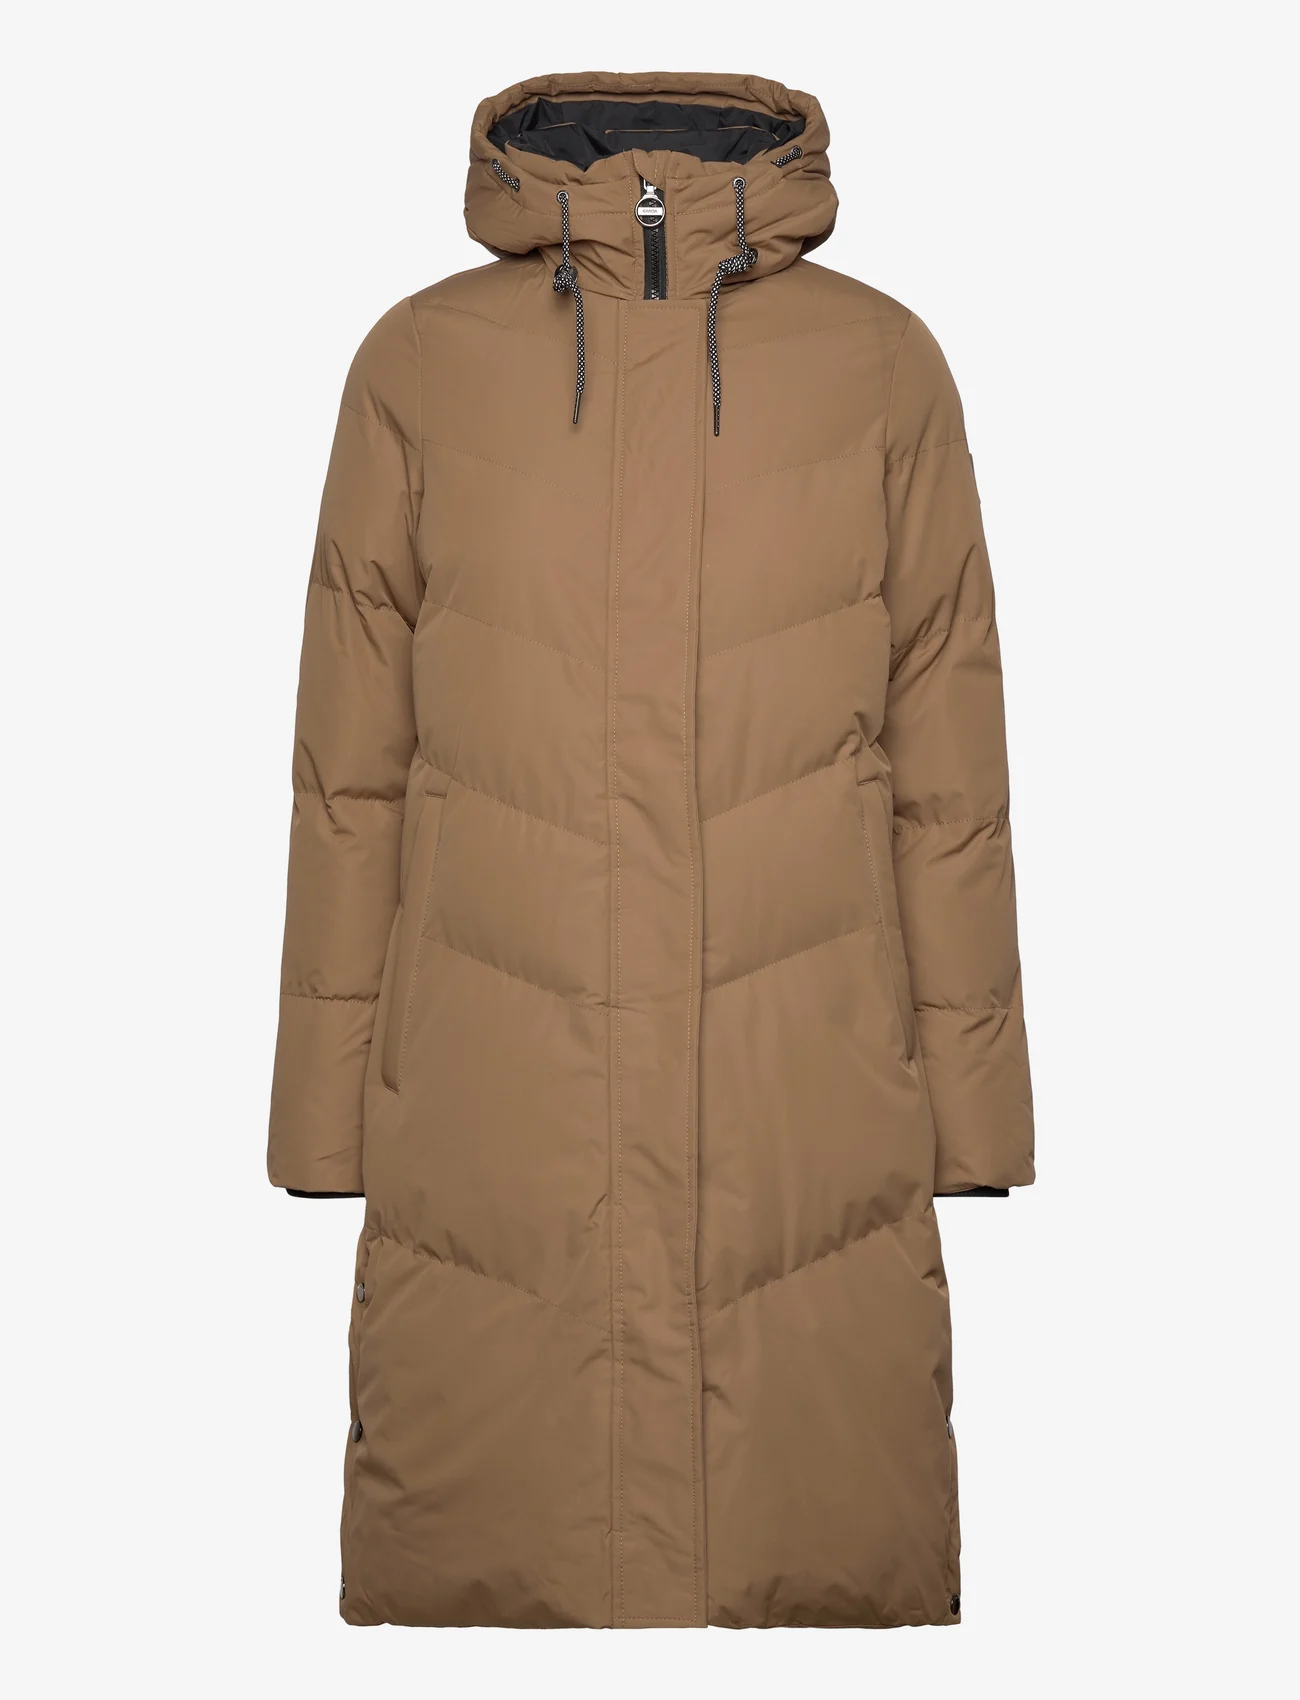 Garcia - ladies outdoor jackets - winter jackets - brown - 0